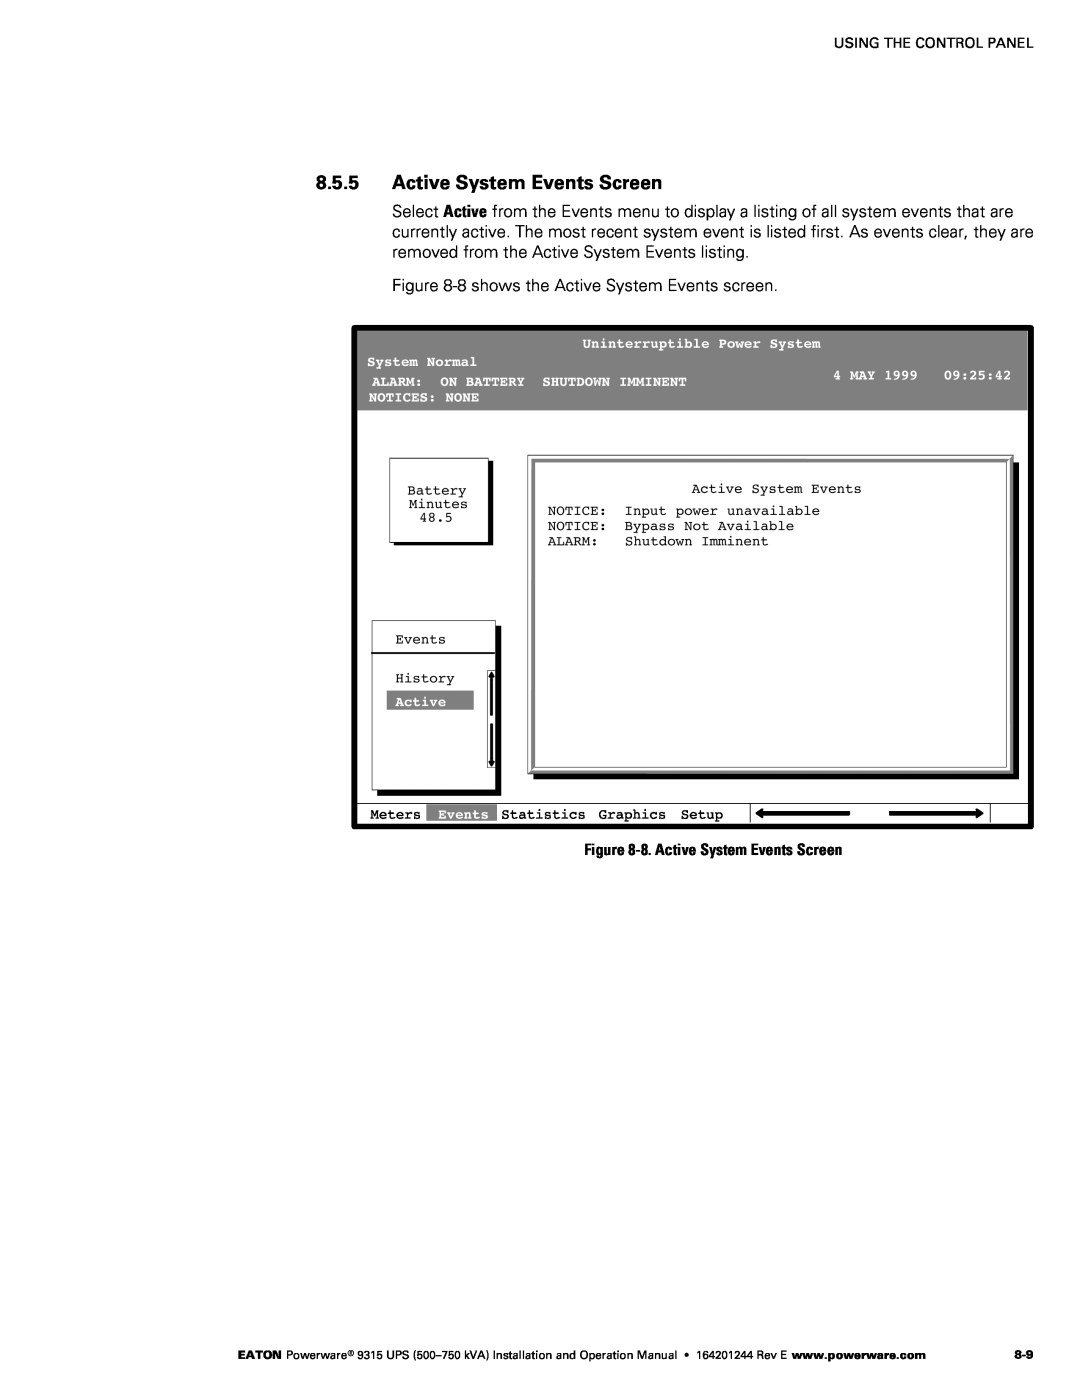 Powerware Powerware 9315 operation manual Active System Events Screen 